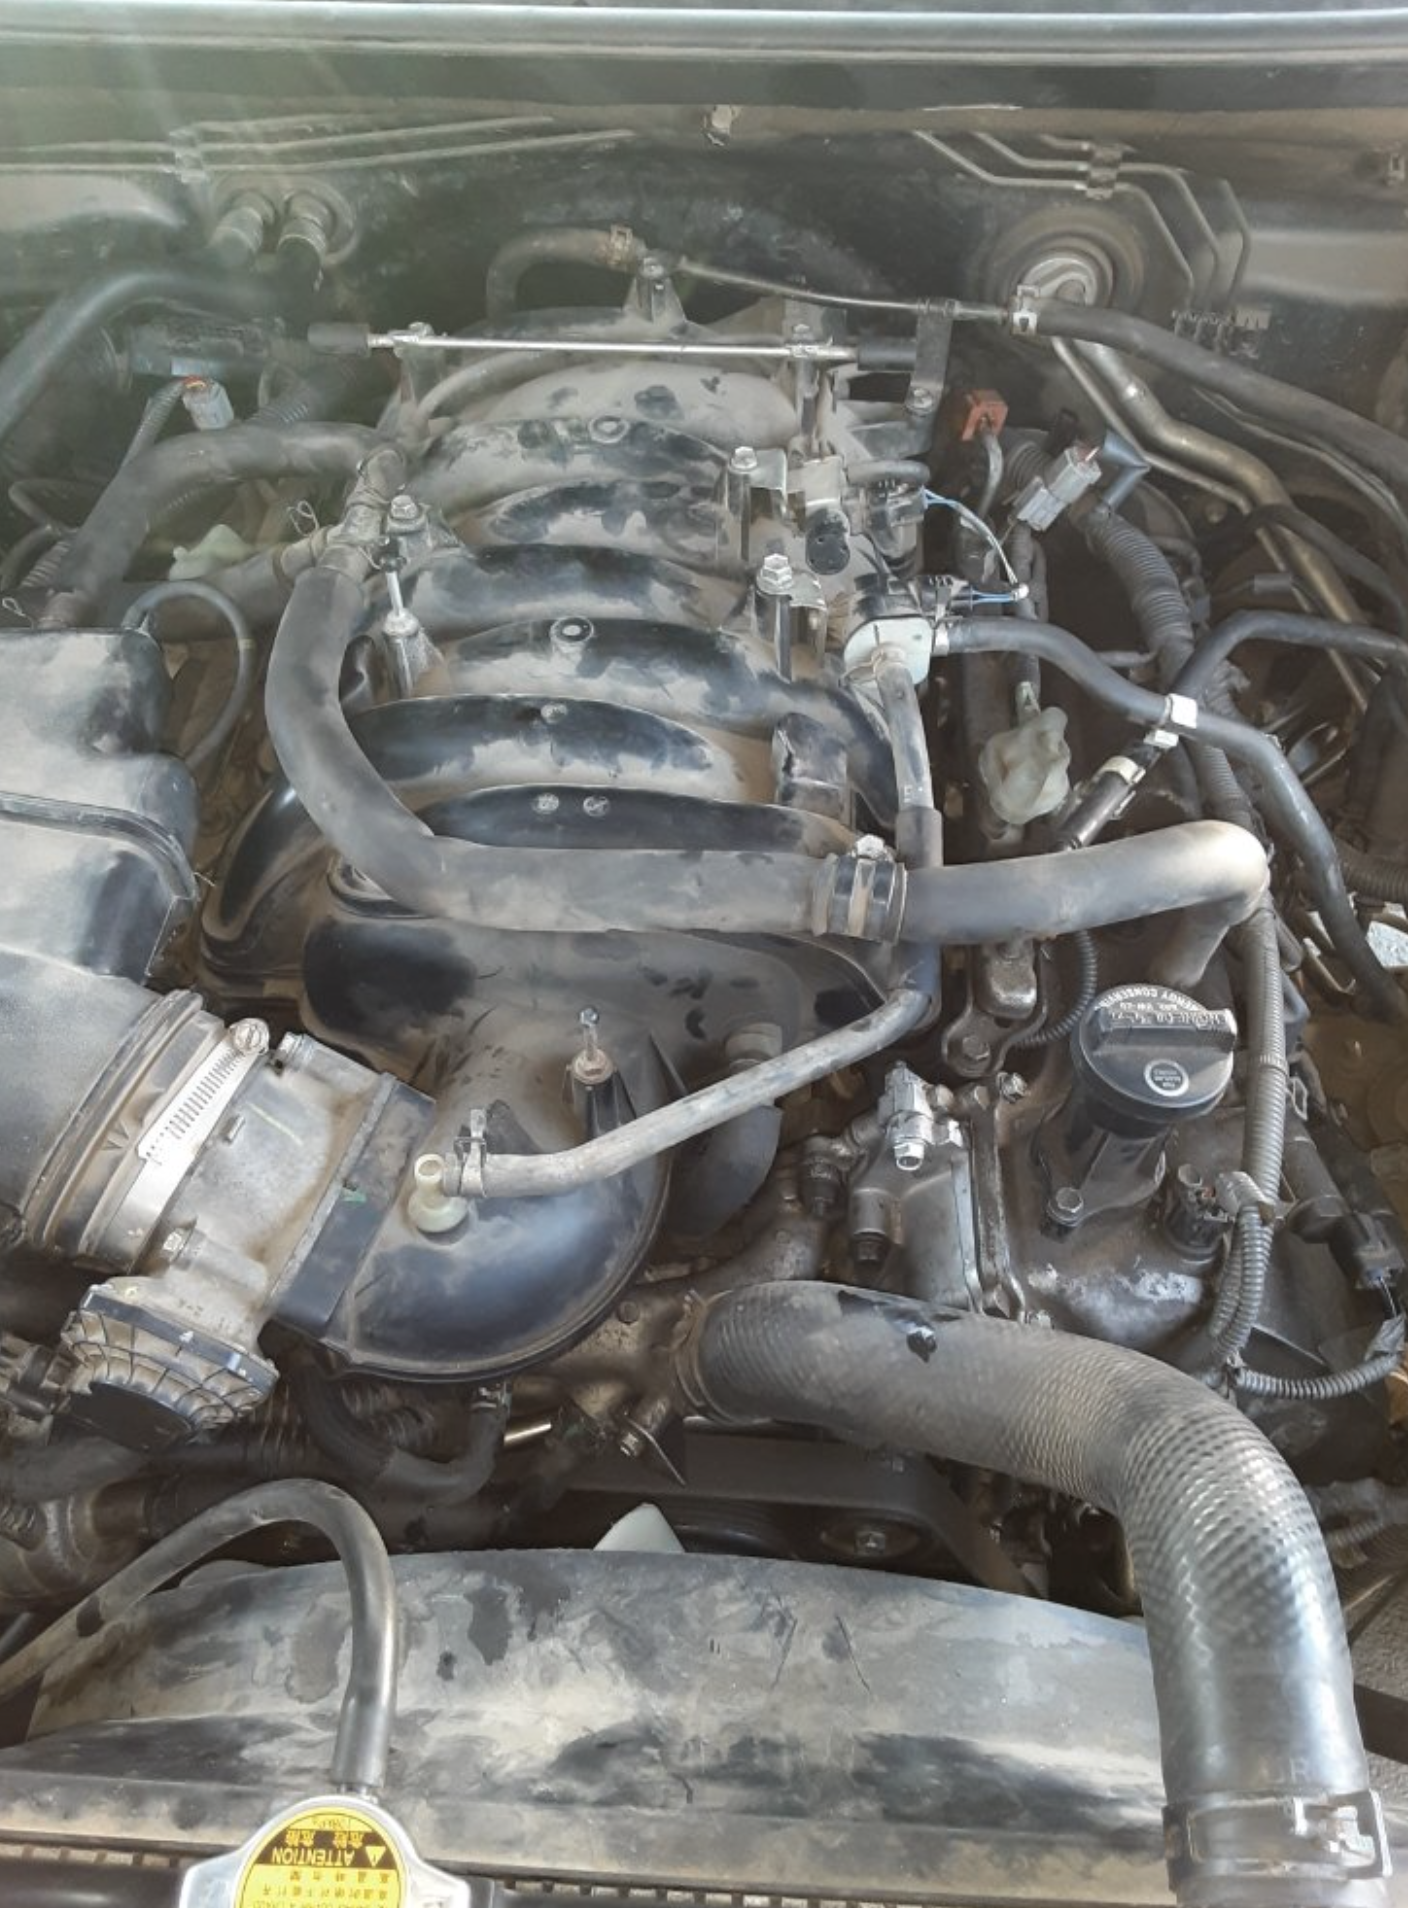 this image shows engine repair in Tampa, FL